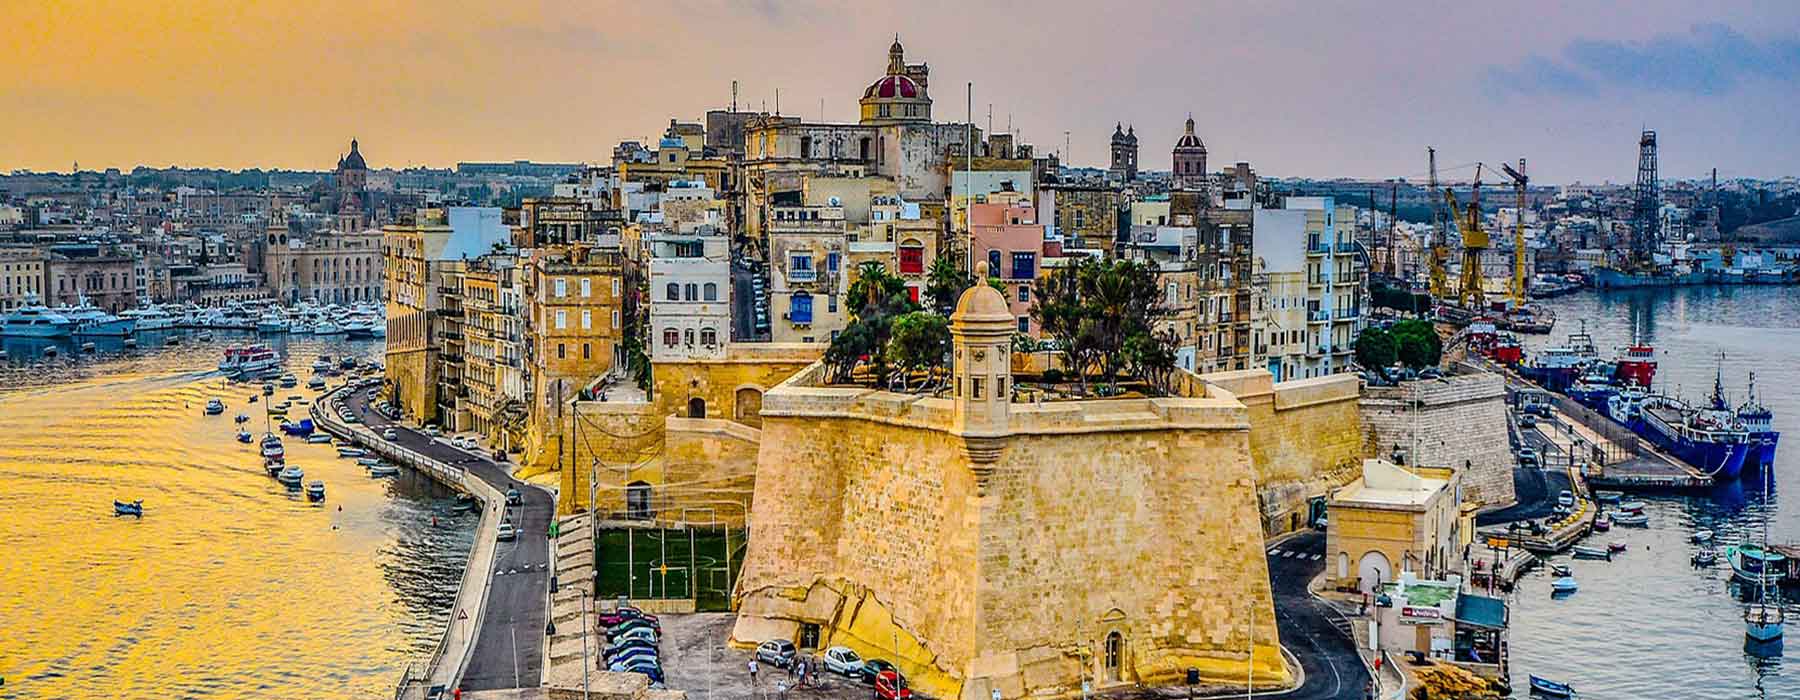 Cost of Buying Malta Citizenship 